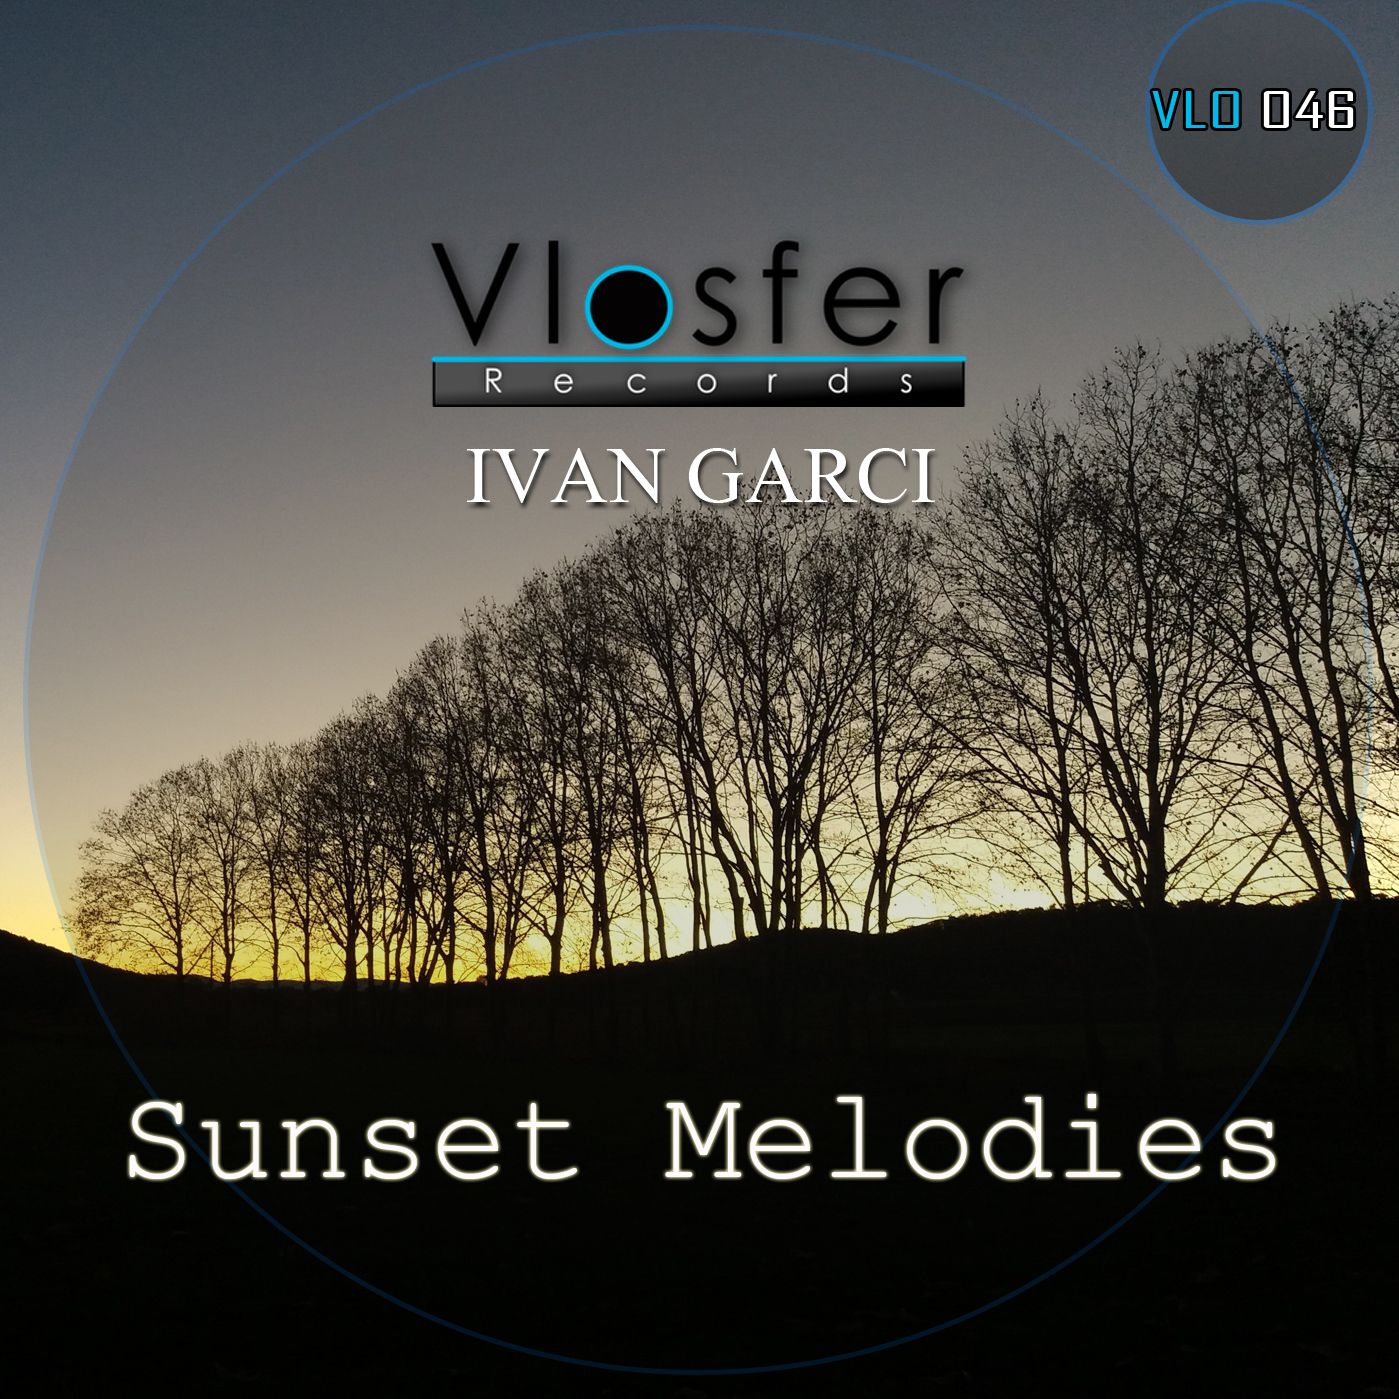 Descarca Clear - Ivan Garci (low quality sound) Vlosfer records.